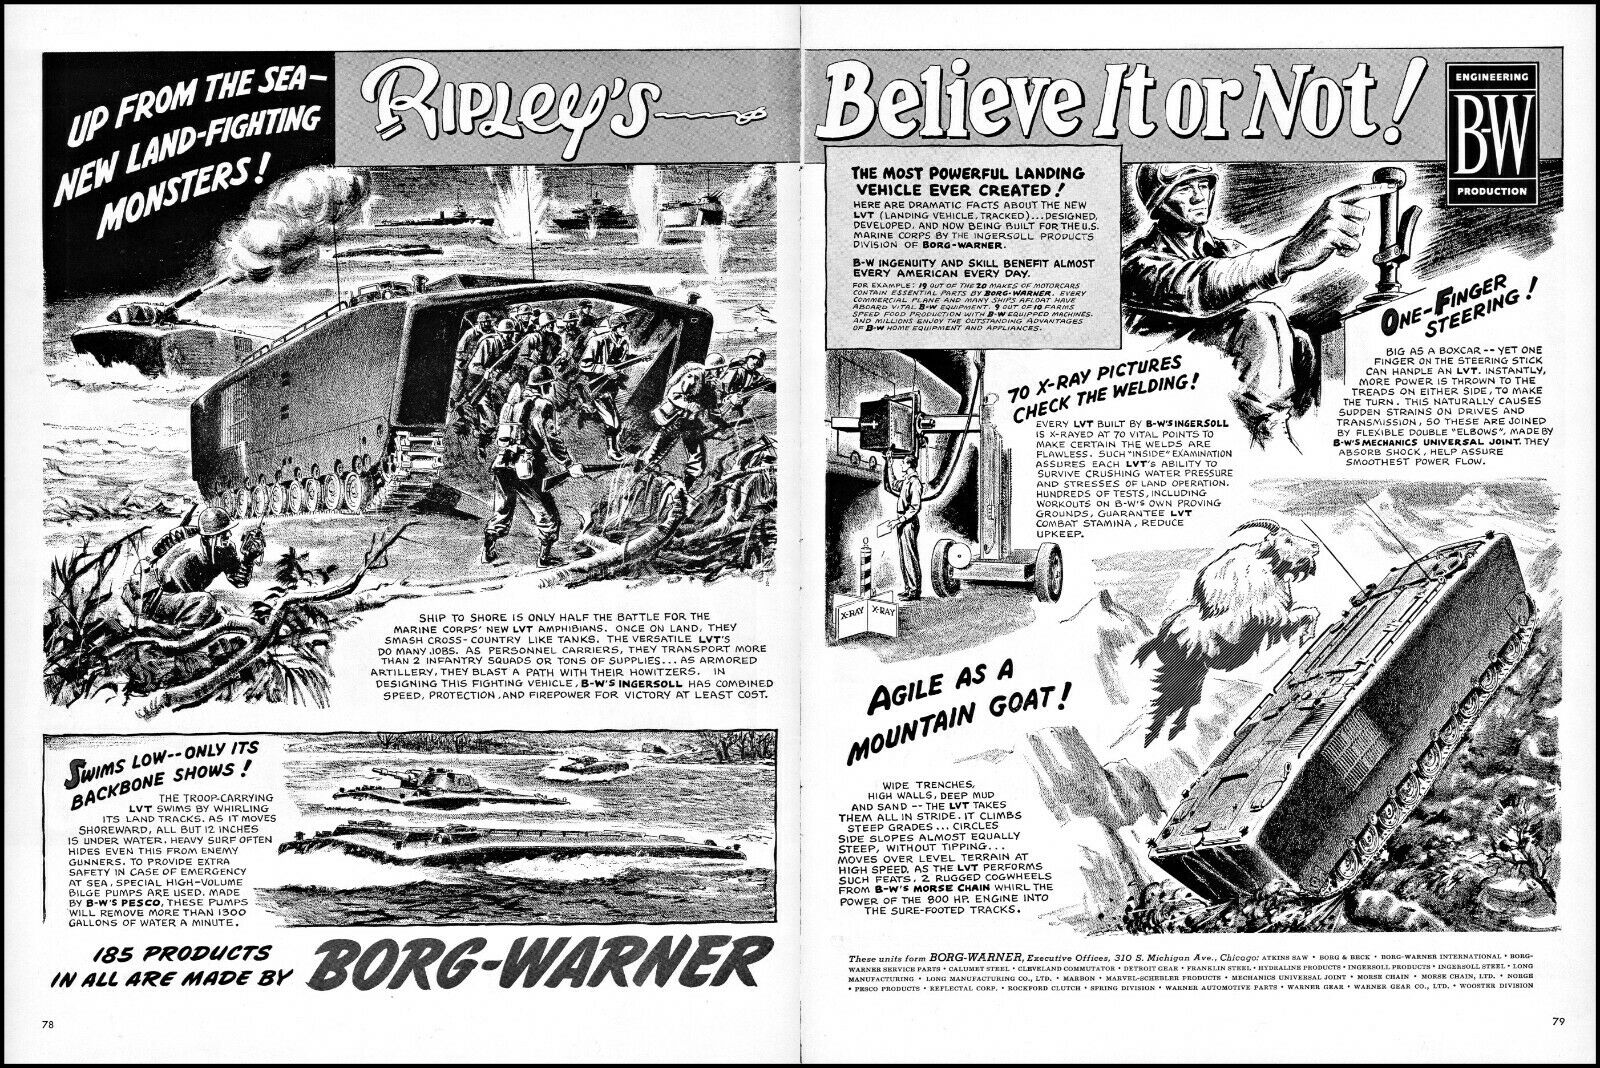 1954 Ripley's Believe It Or Not Borg-warner Us Military Vintage Art Print Ad L73